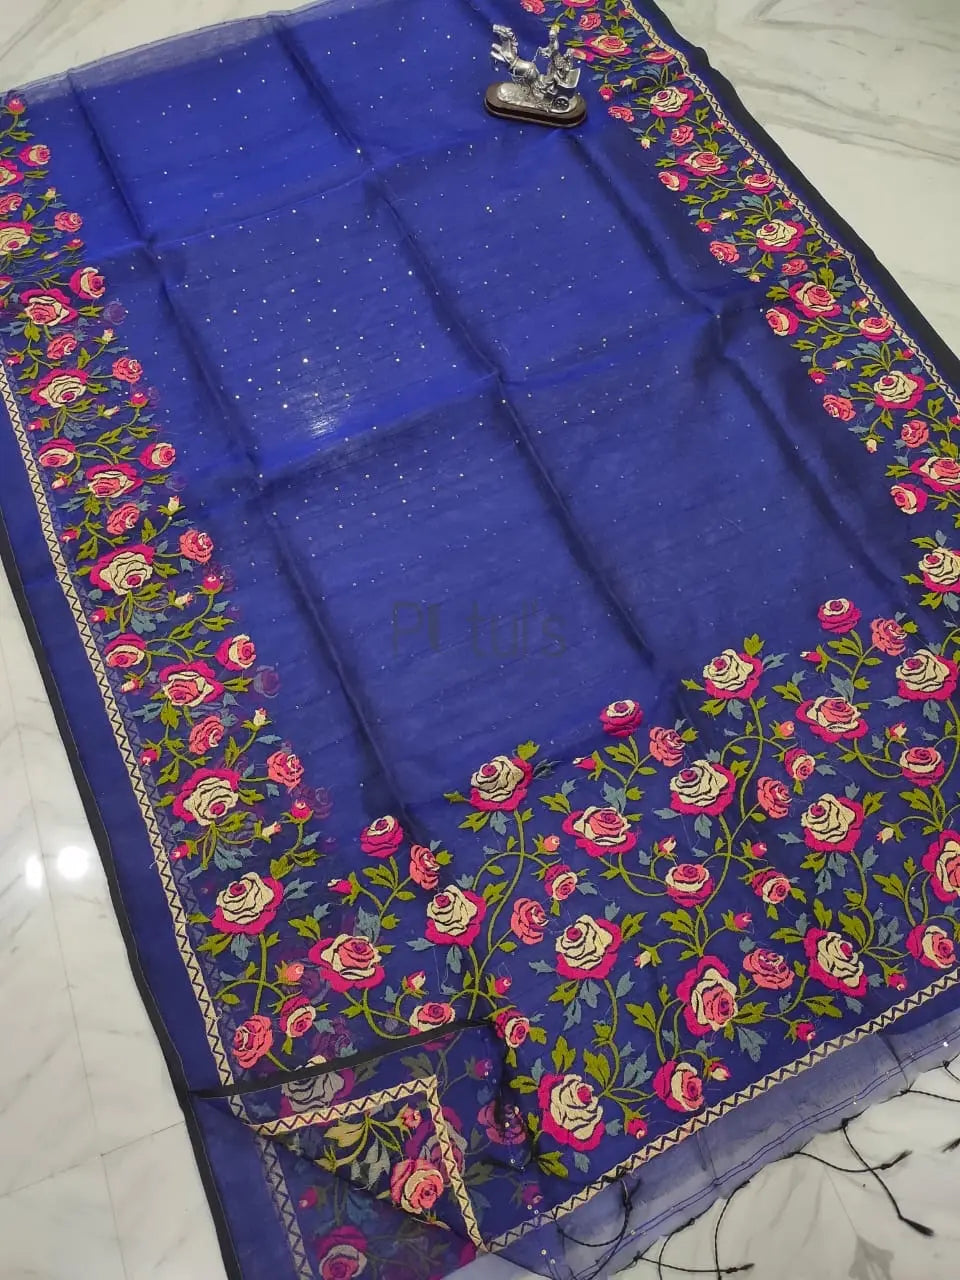 Rose parsi embroidery on Muslin saree Putul's Fashion